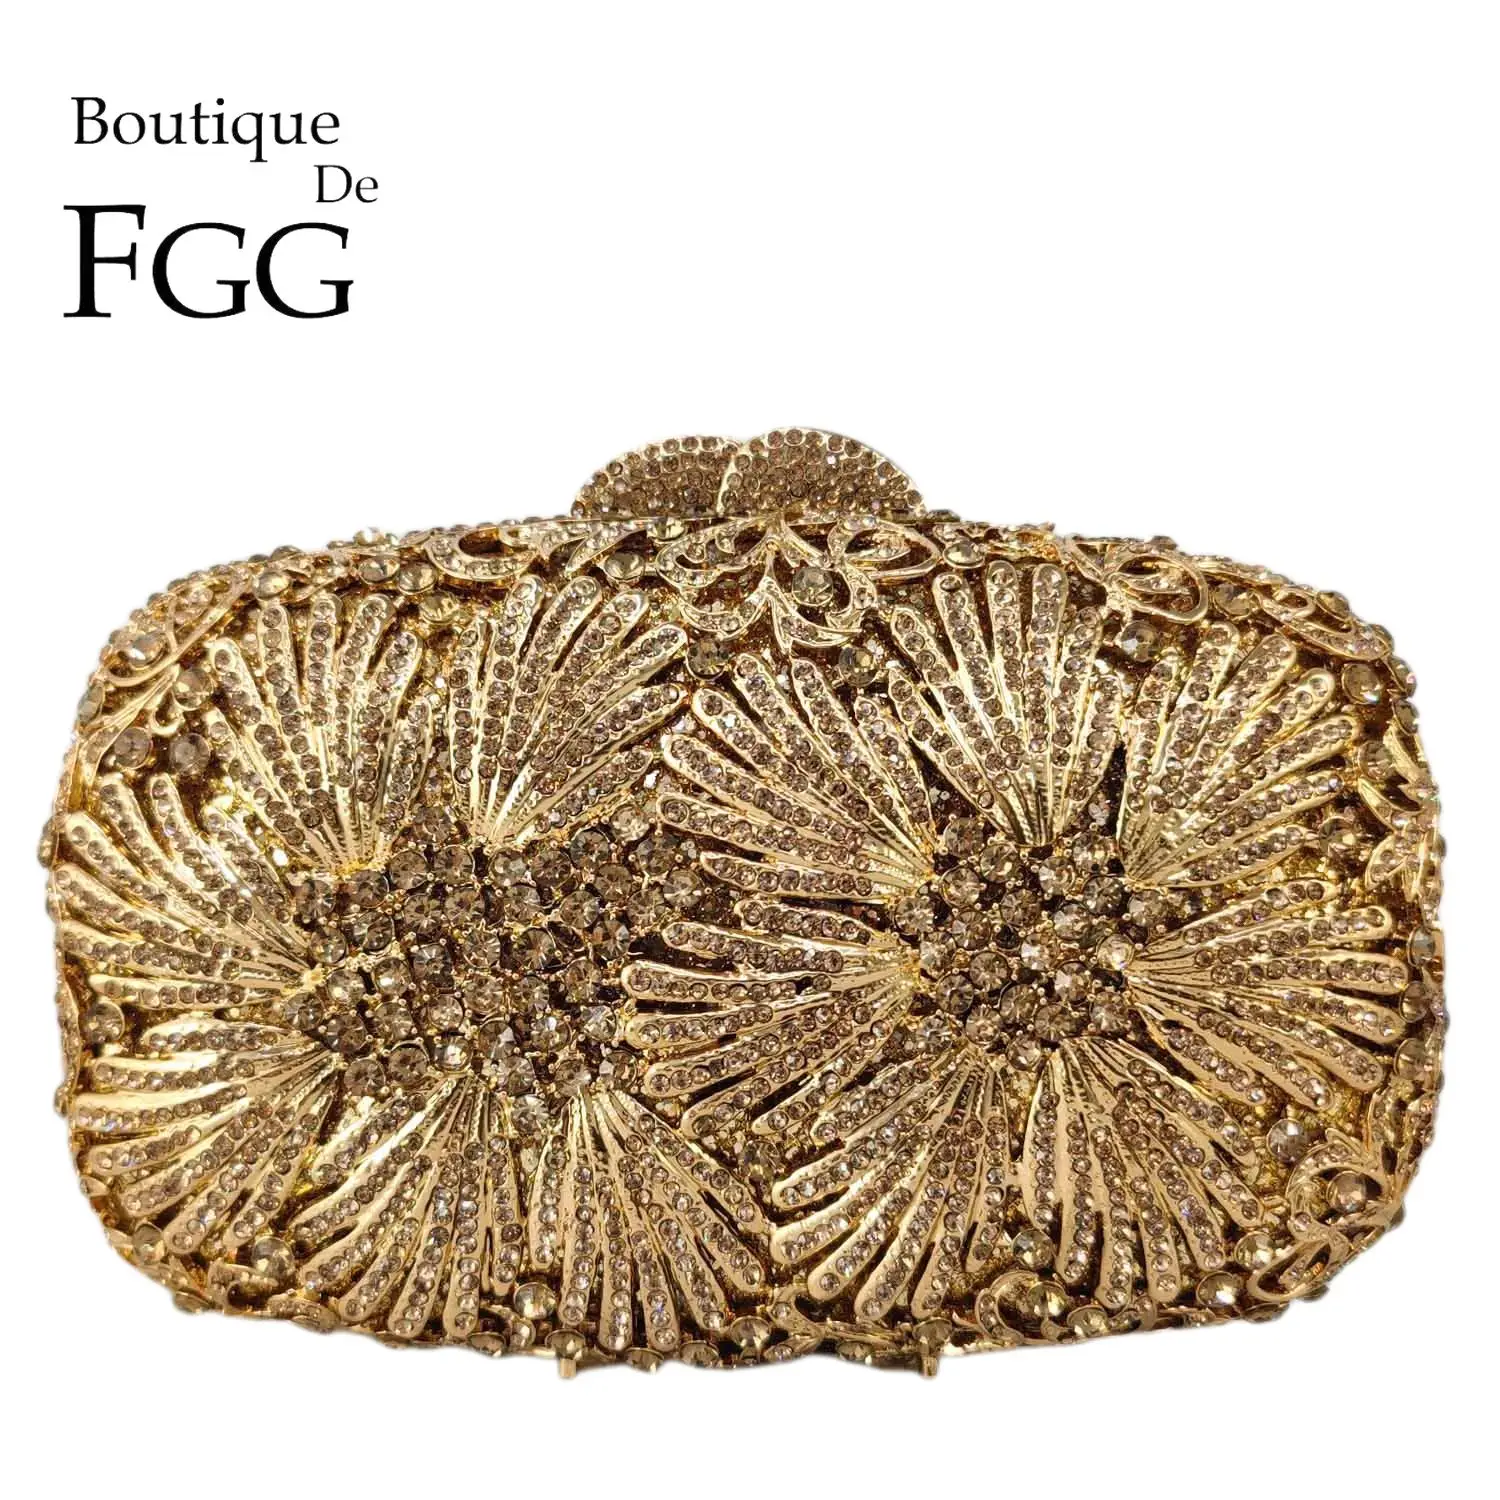 

Boutique De FGG Women Flower Crystal Clutch Bag Golden Minaudiere Bag Wedding Party Bridal Rhinestone Evening Handbags and Purse